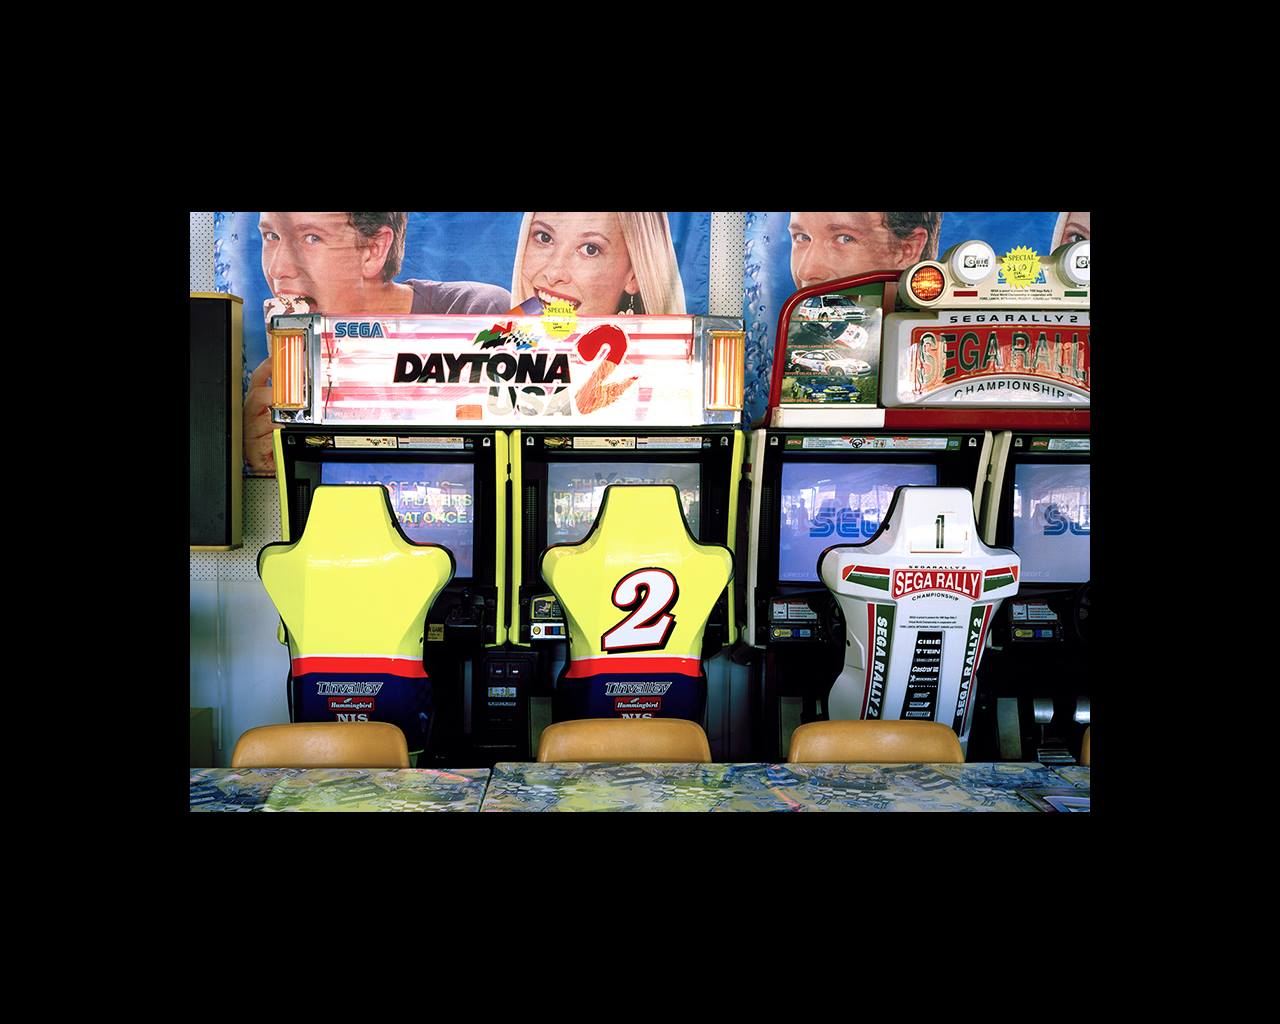 Image of Daytona machines